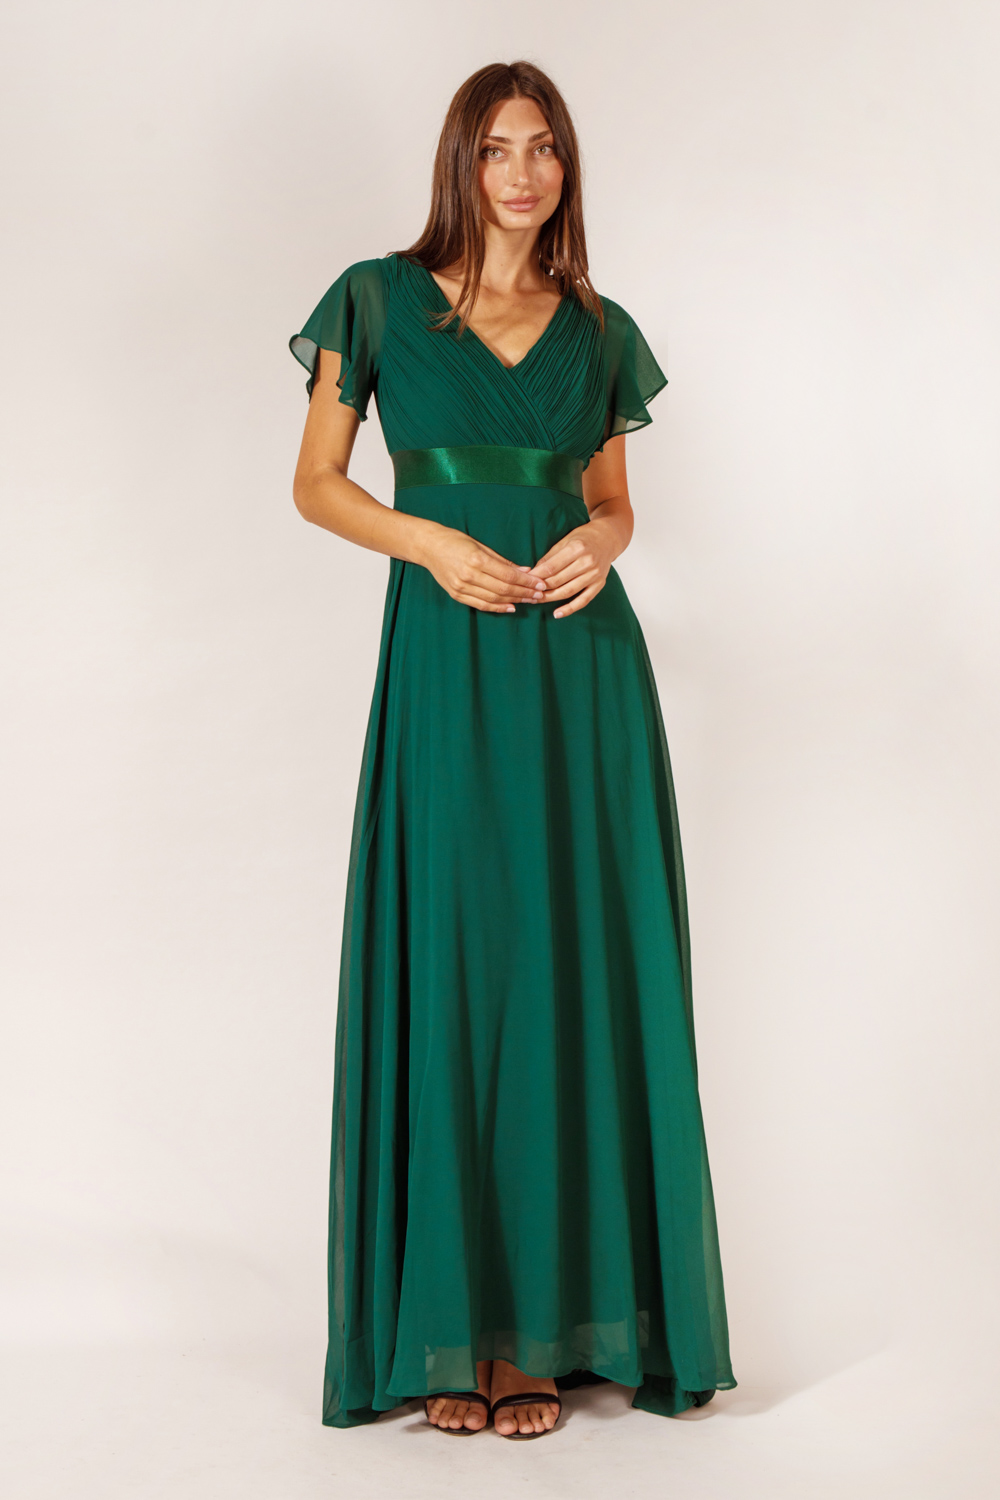 Emerald Green Maxi Dress - Tie-Strap Dress - Bridesmaid Dress - Lulus